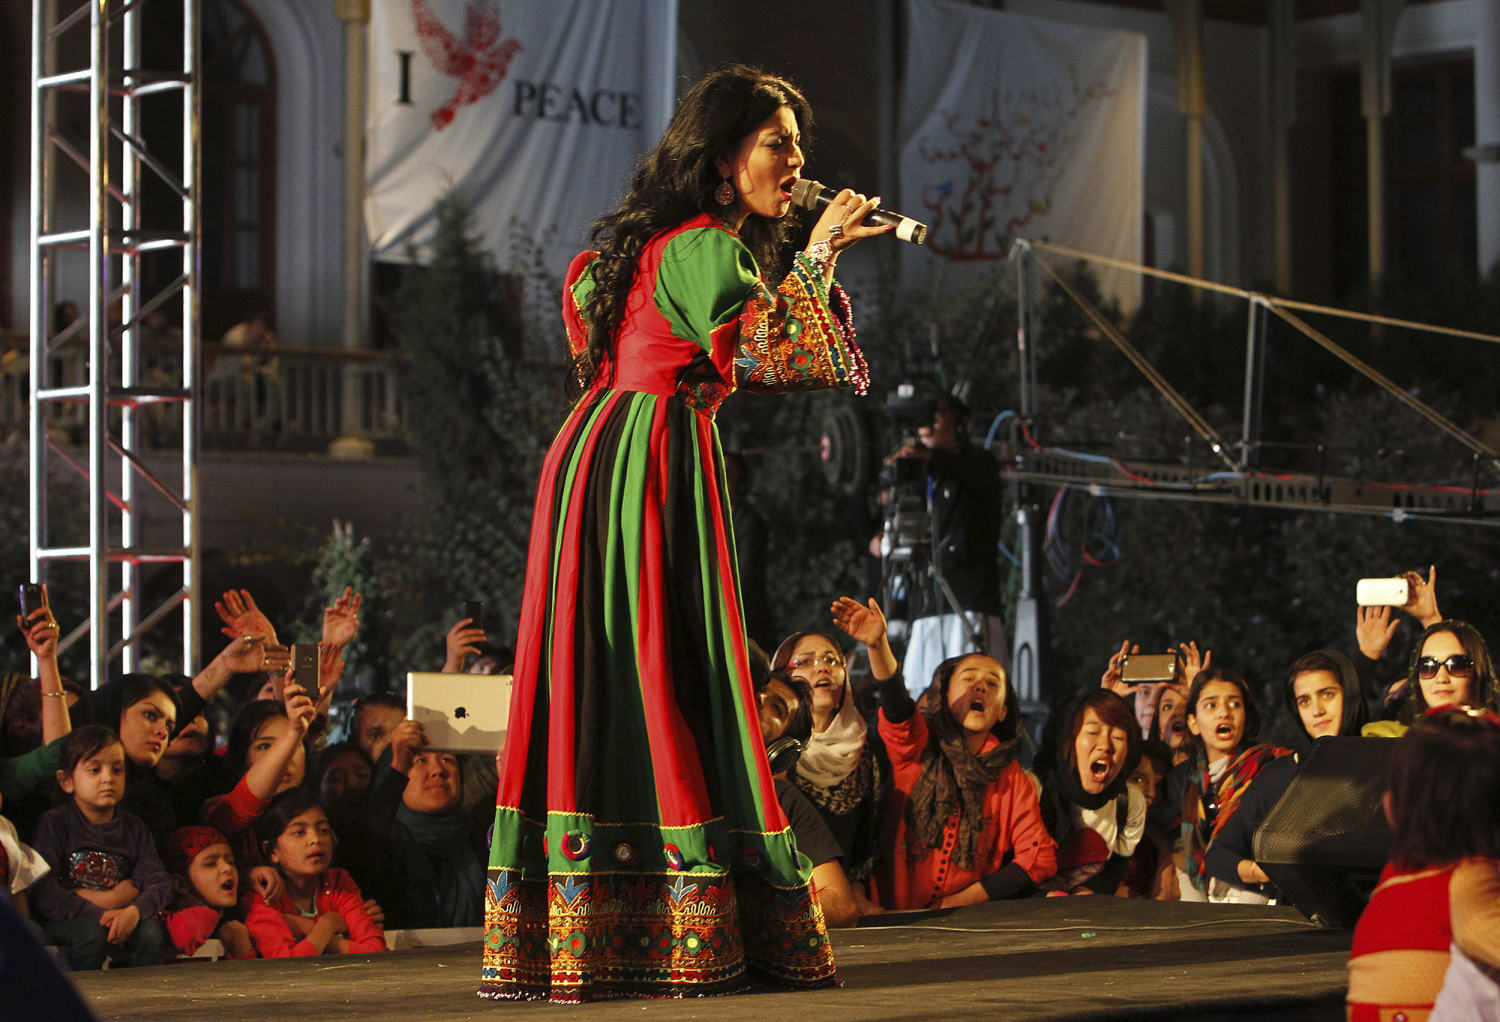 Sex Girl Aryana Sayd - Afghan pop star says she was 'hopeless' before fleeing Taliban